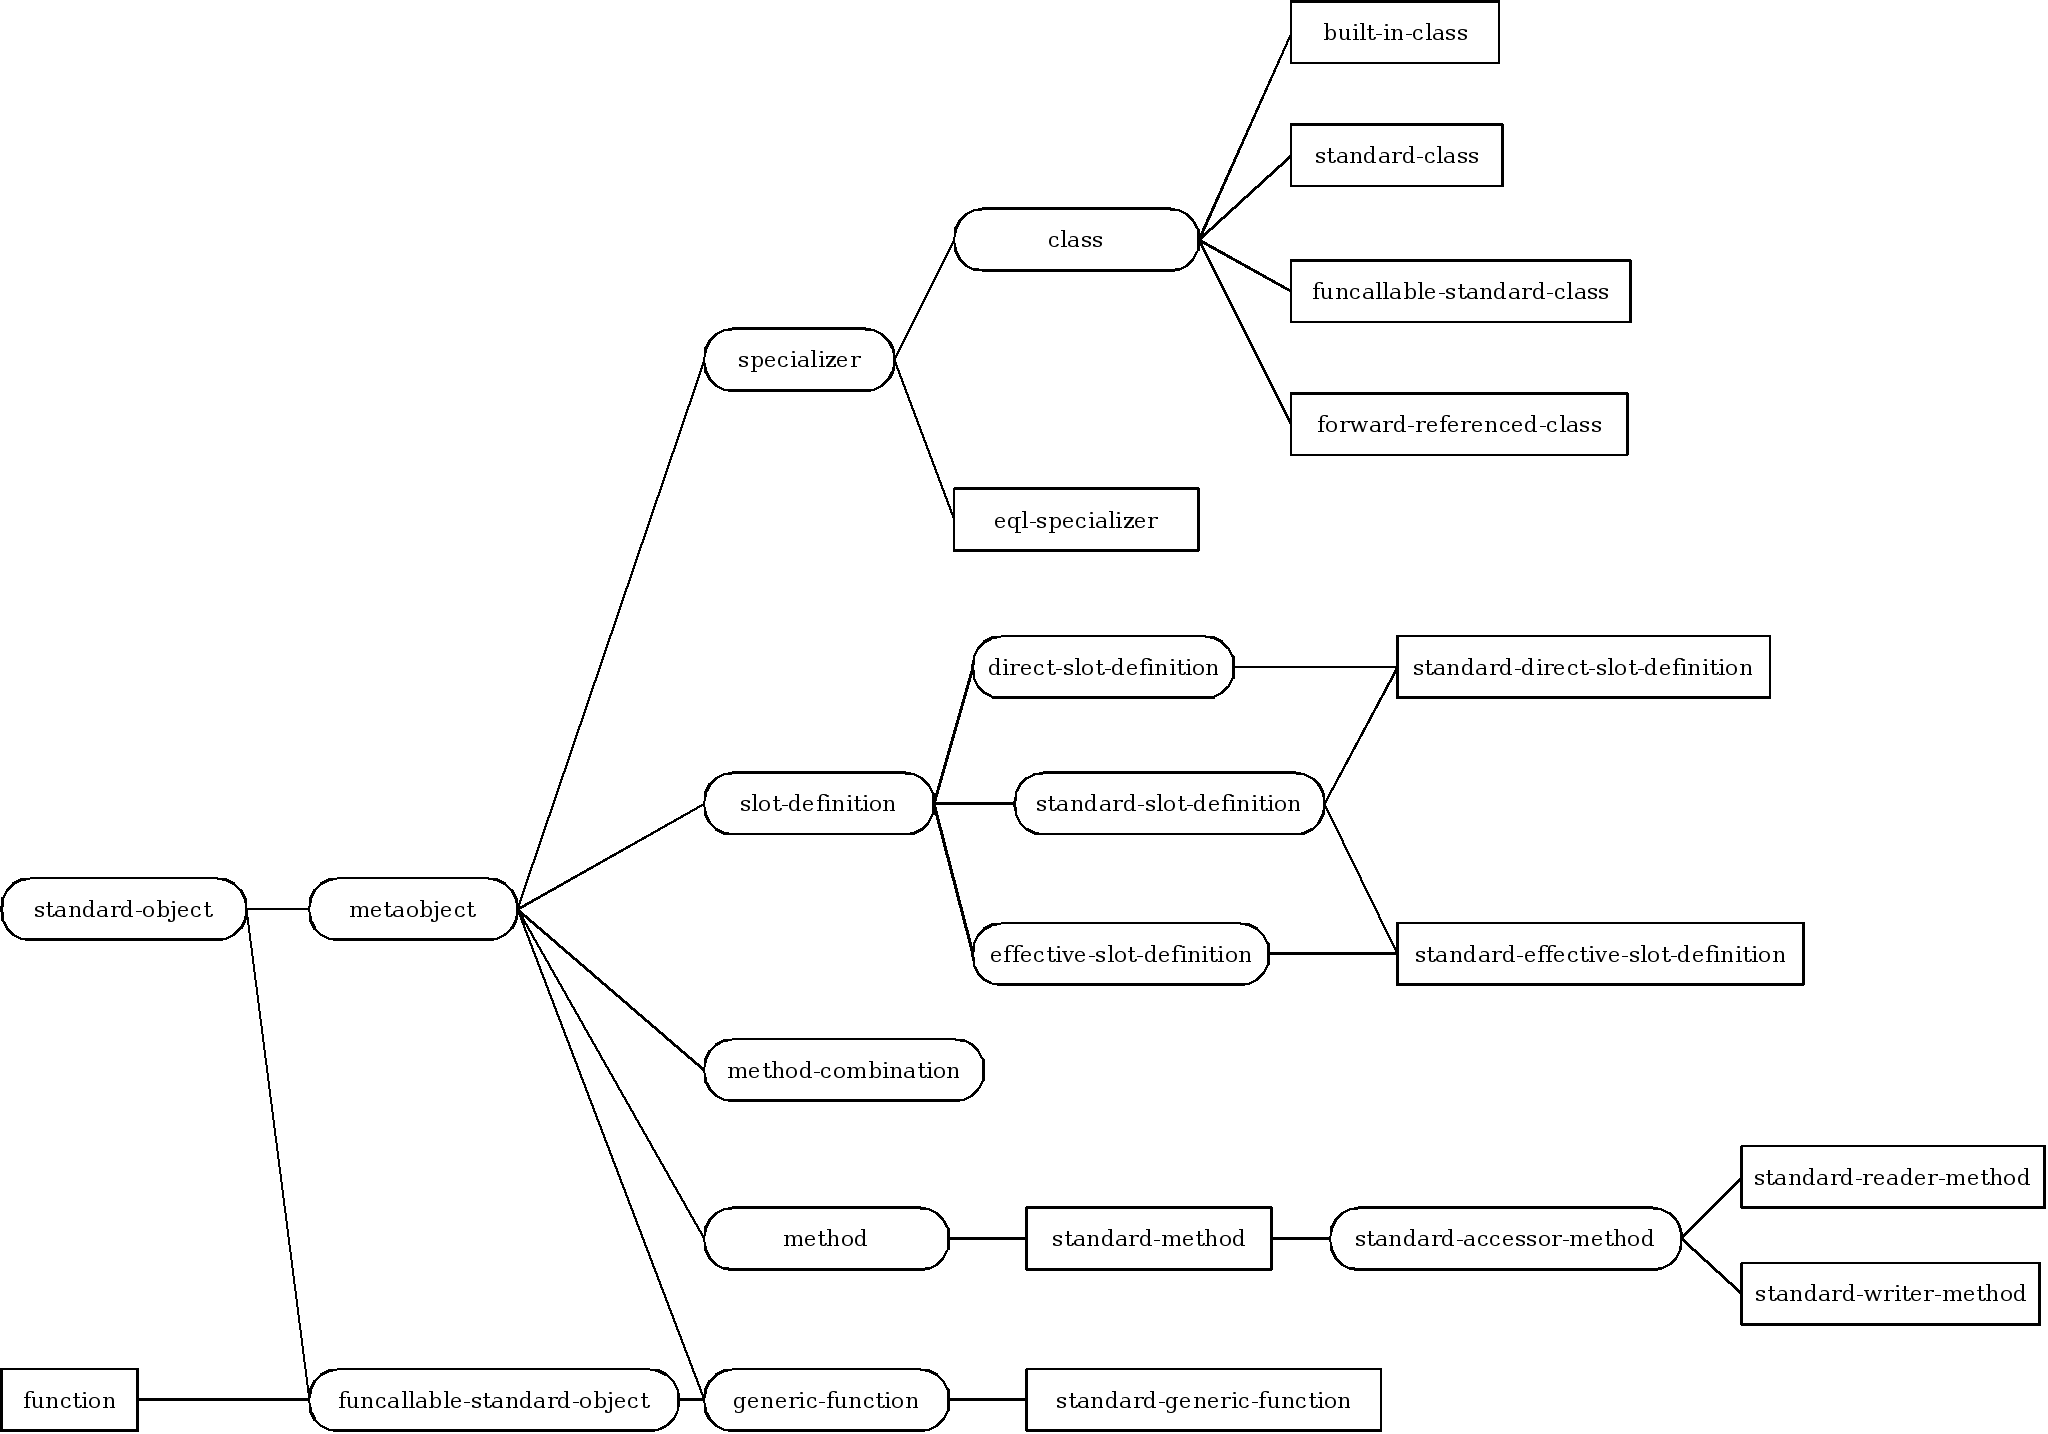 Inheritance structure of metaobject classes